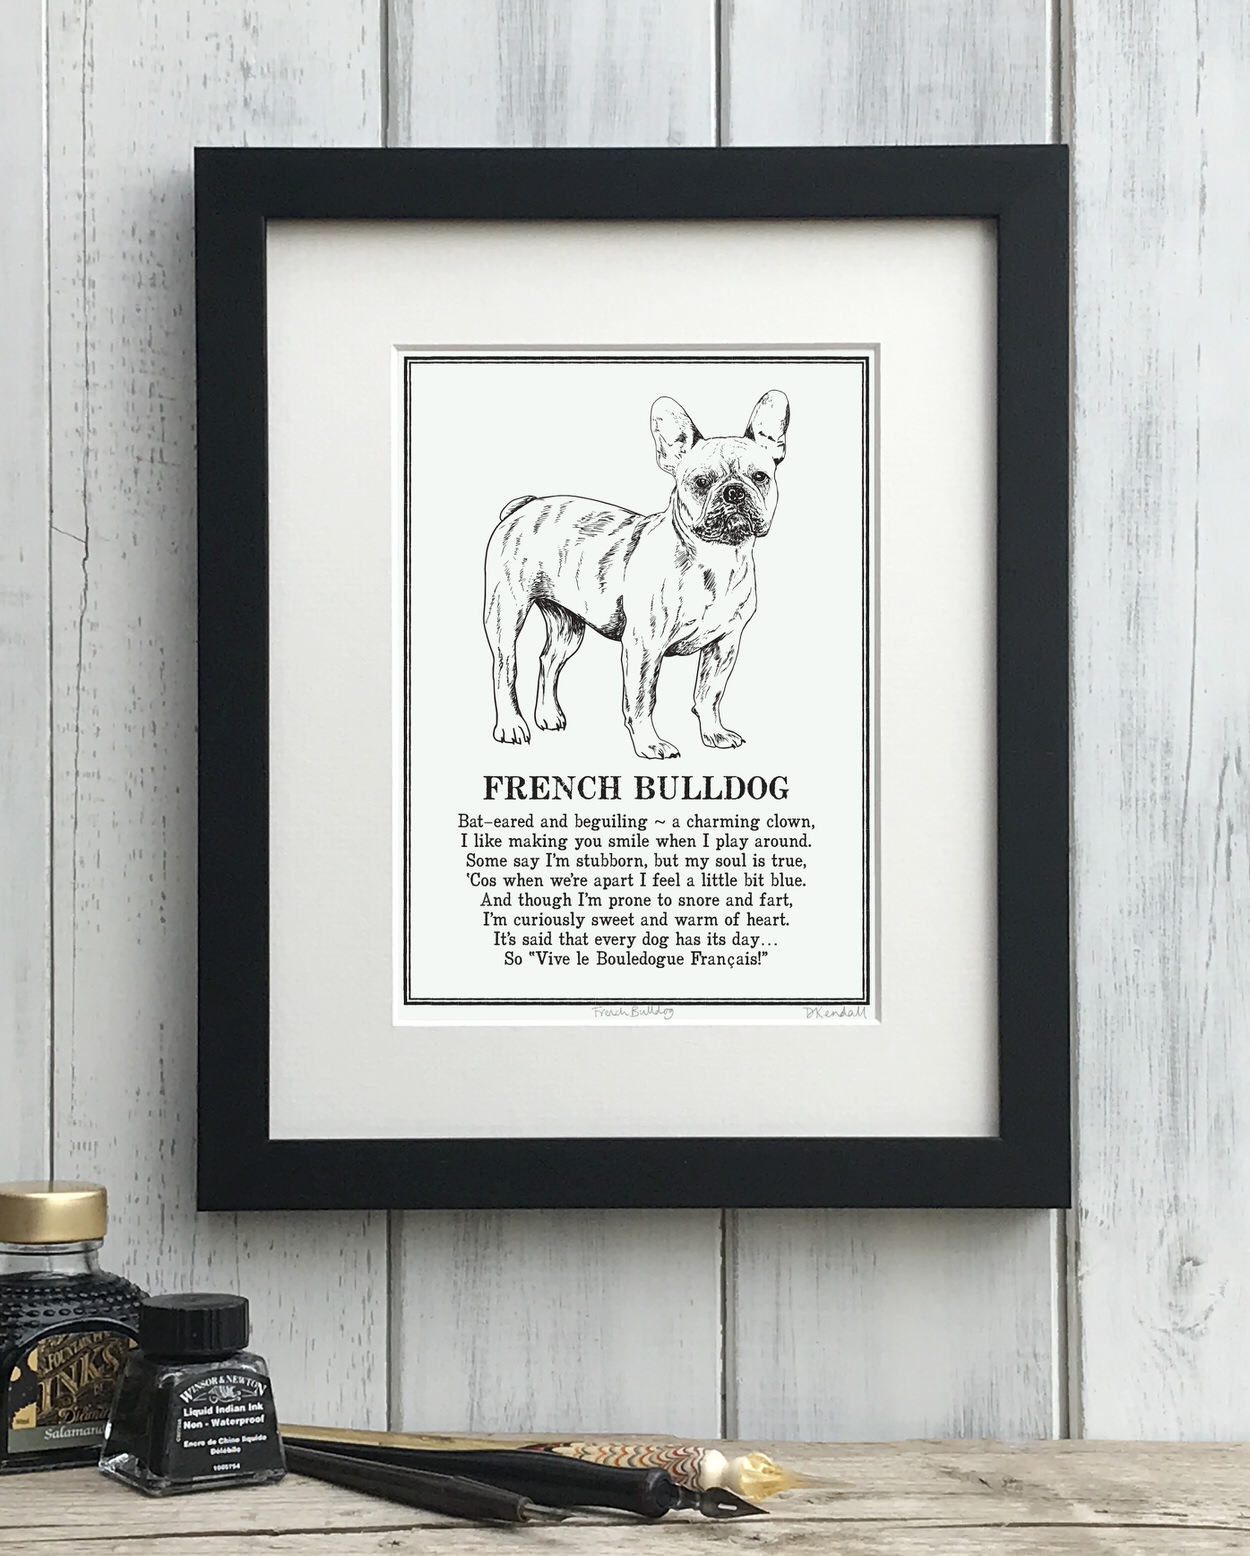 French Bulldog Doggerel Illustrated Poem Art Print | The Enlightened Hound